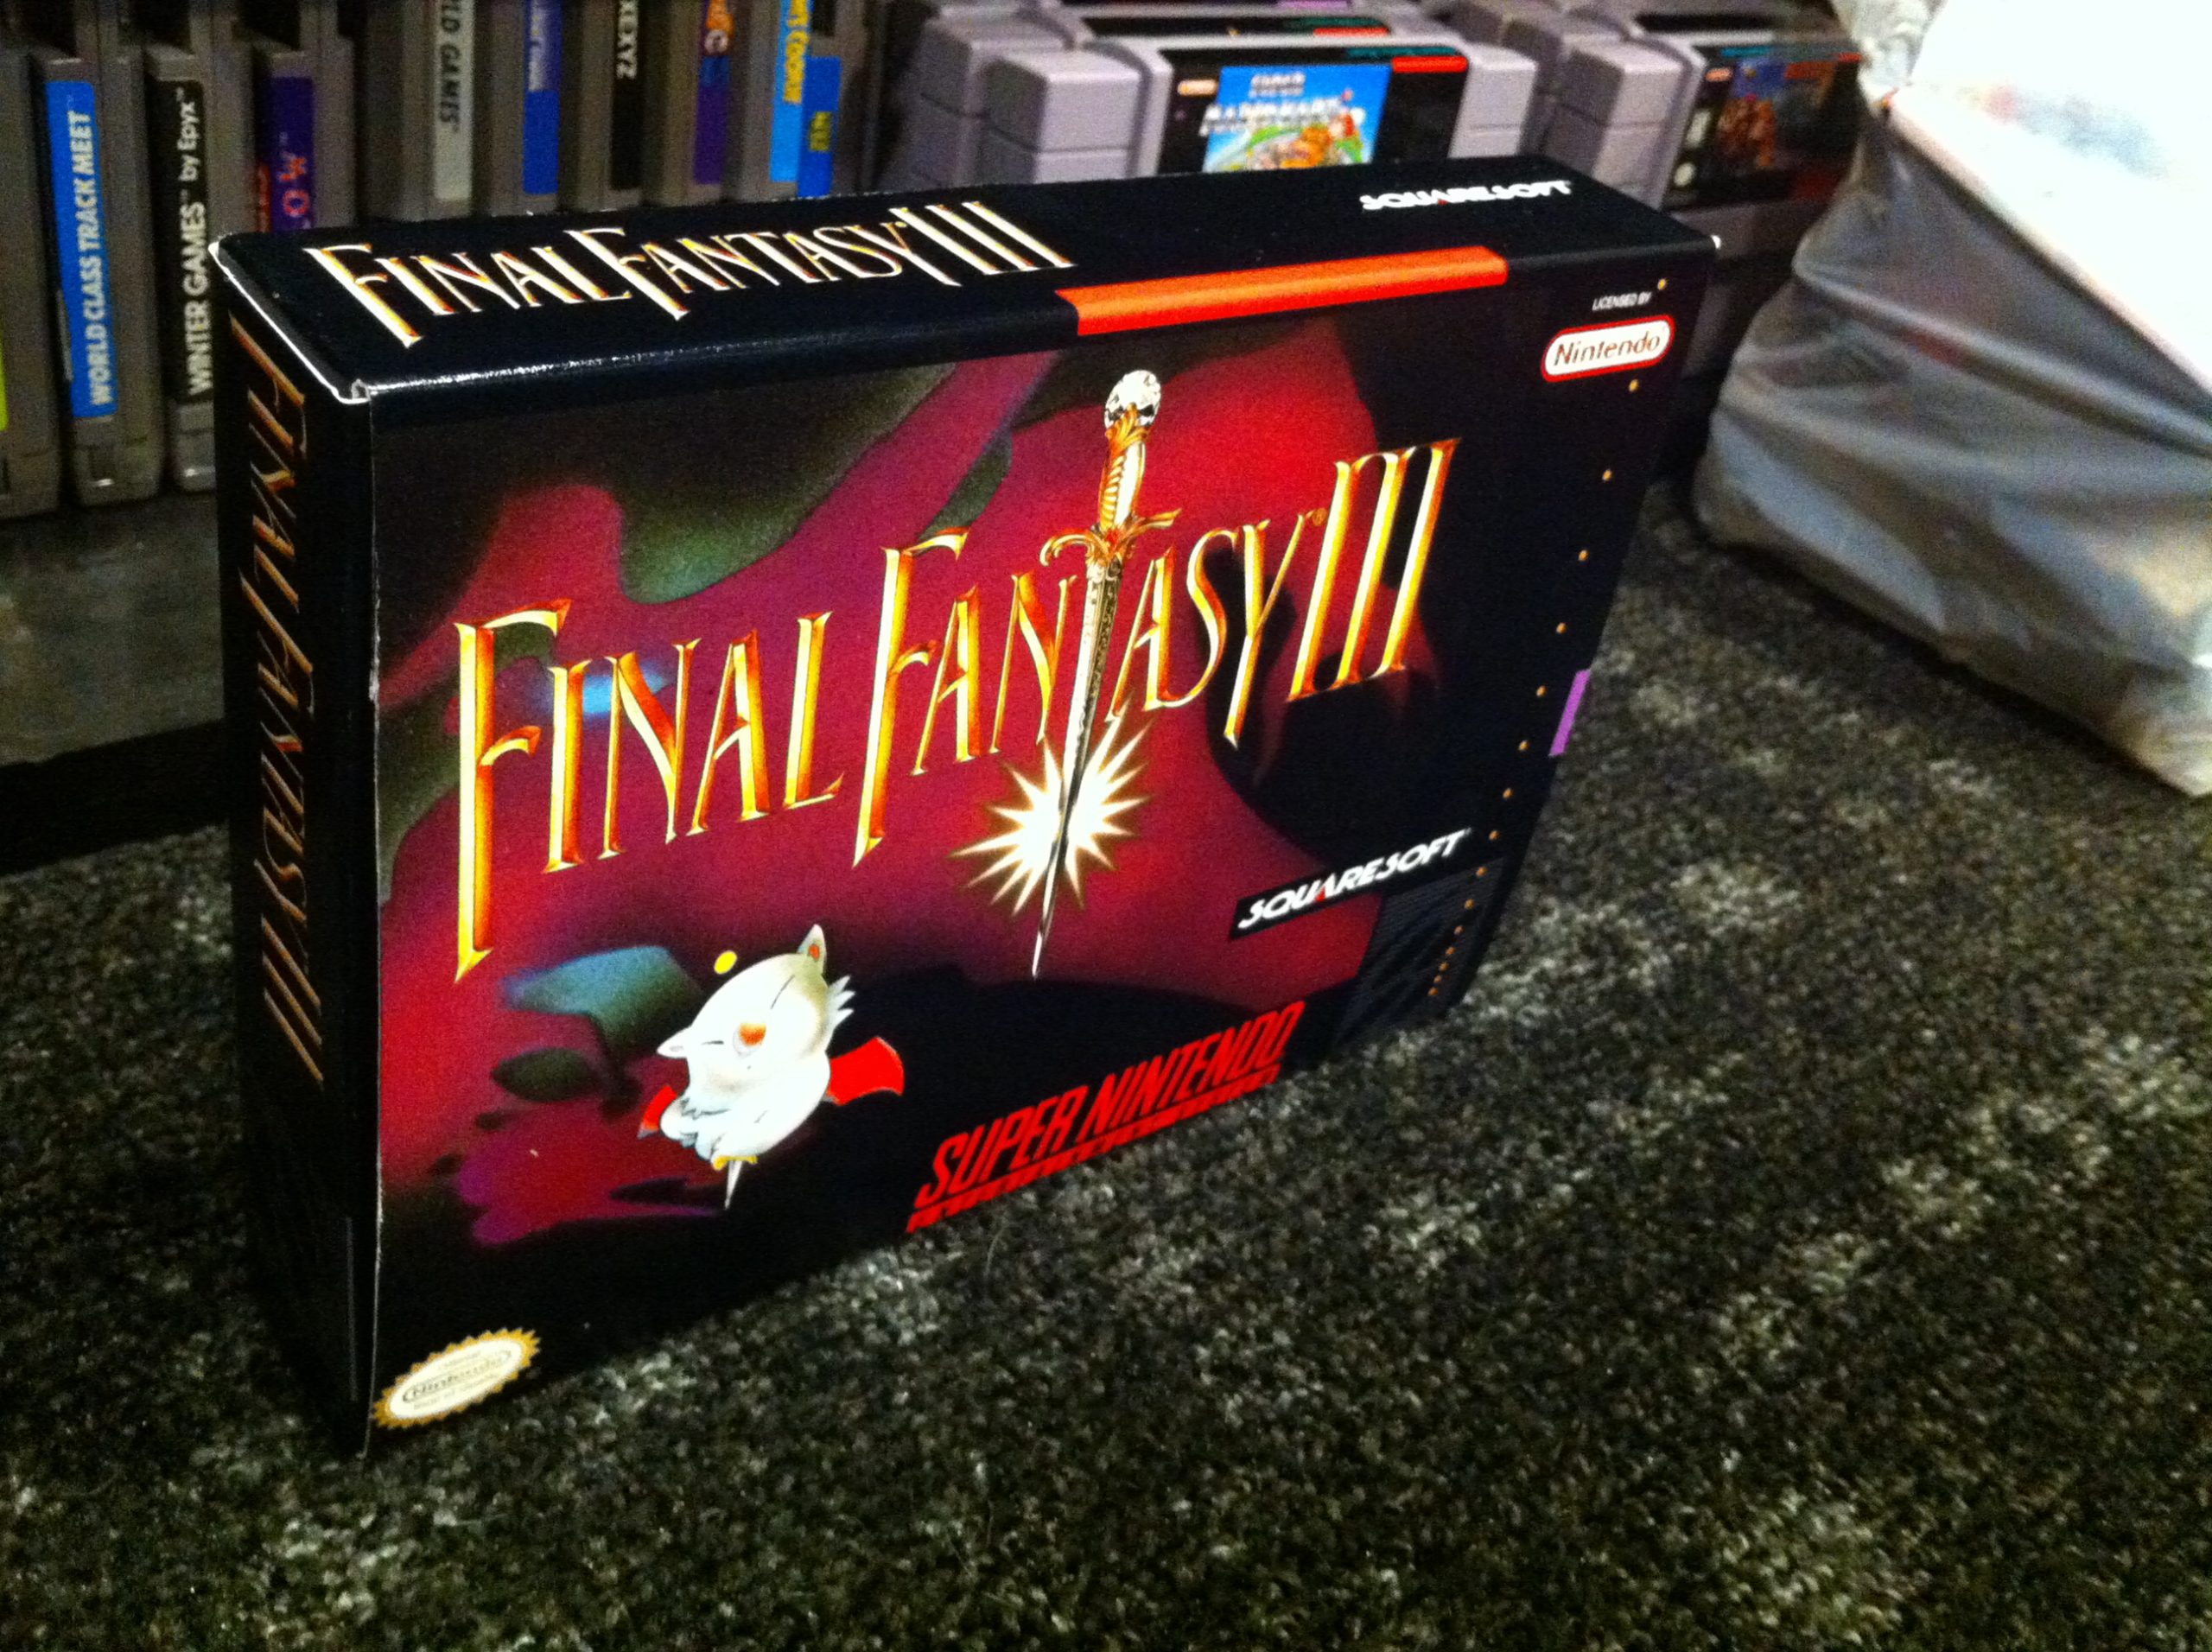 Fantasy 3Box Games! Reproduction game boxes